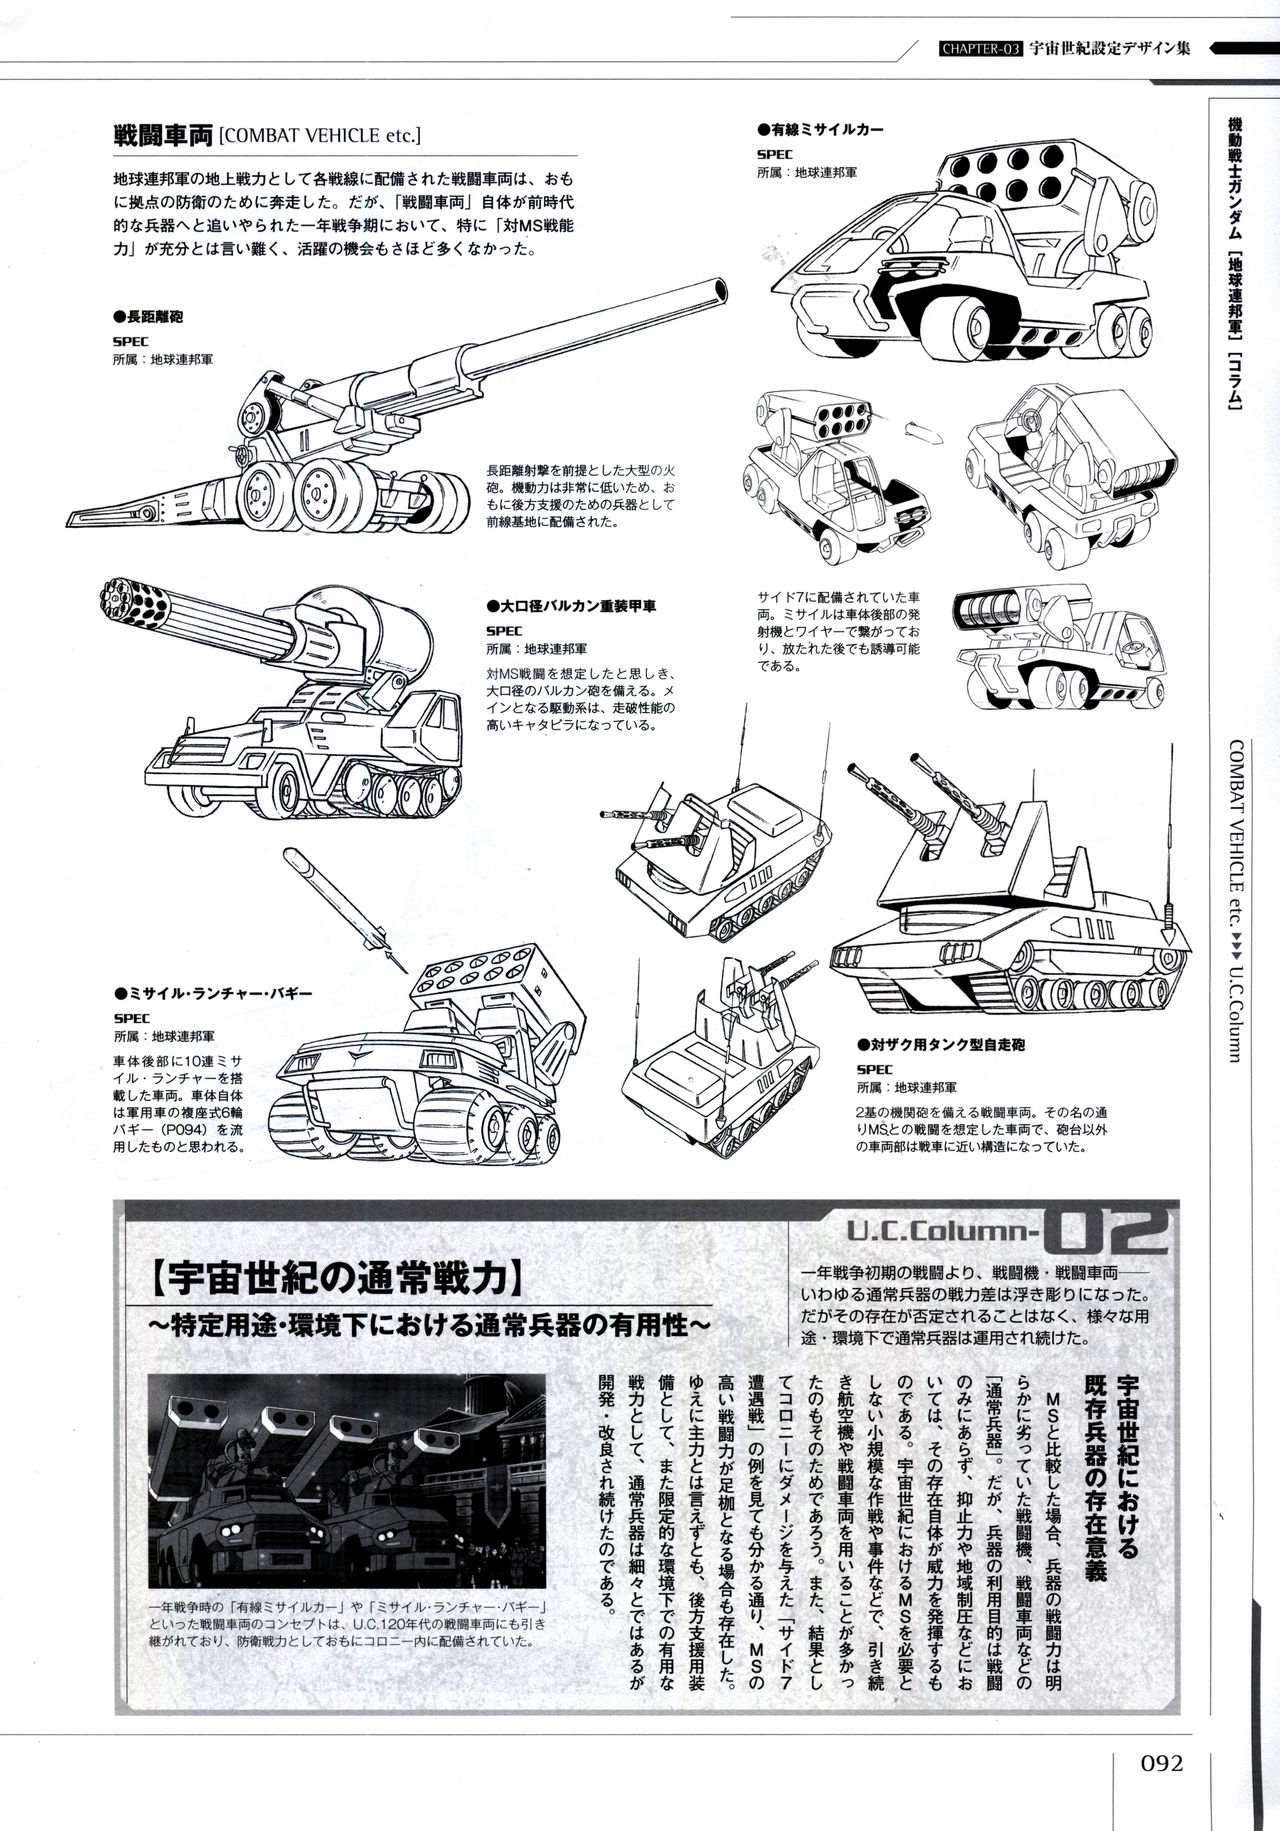 Mobile Suit Gundam - Ship & Aerospace Plane Encyclopedia - Revised Edition 97